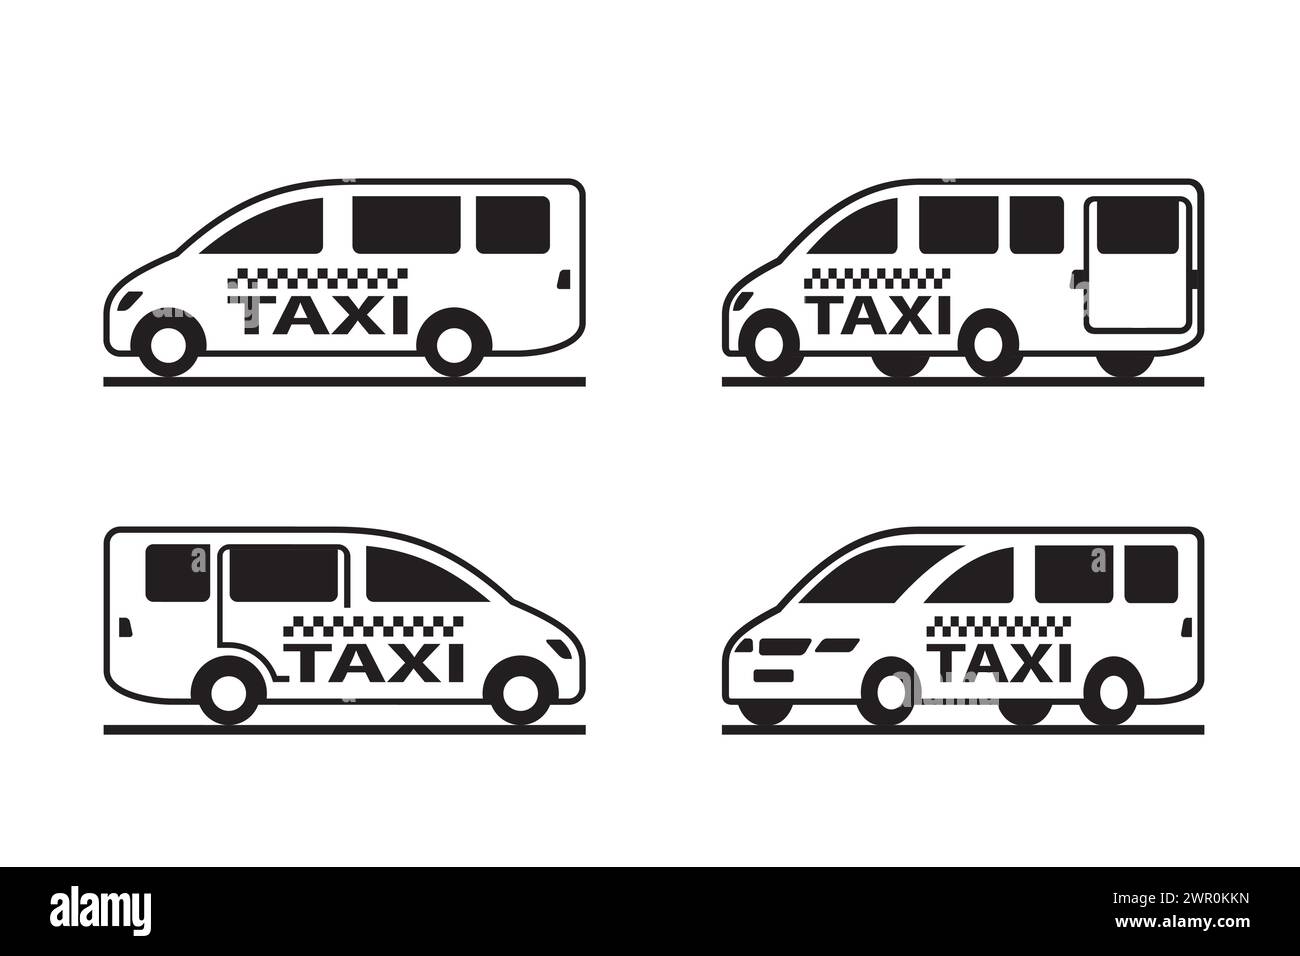 Taxi van in different view - vector illustration Stock Vector